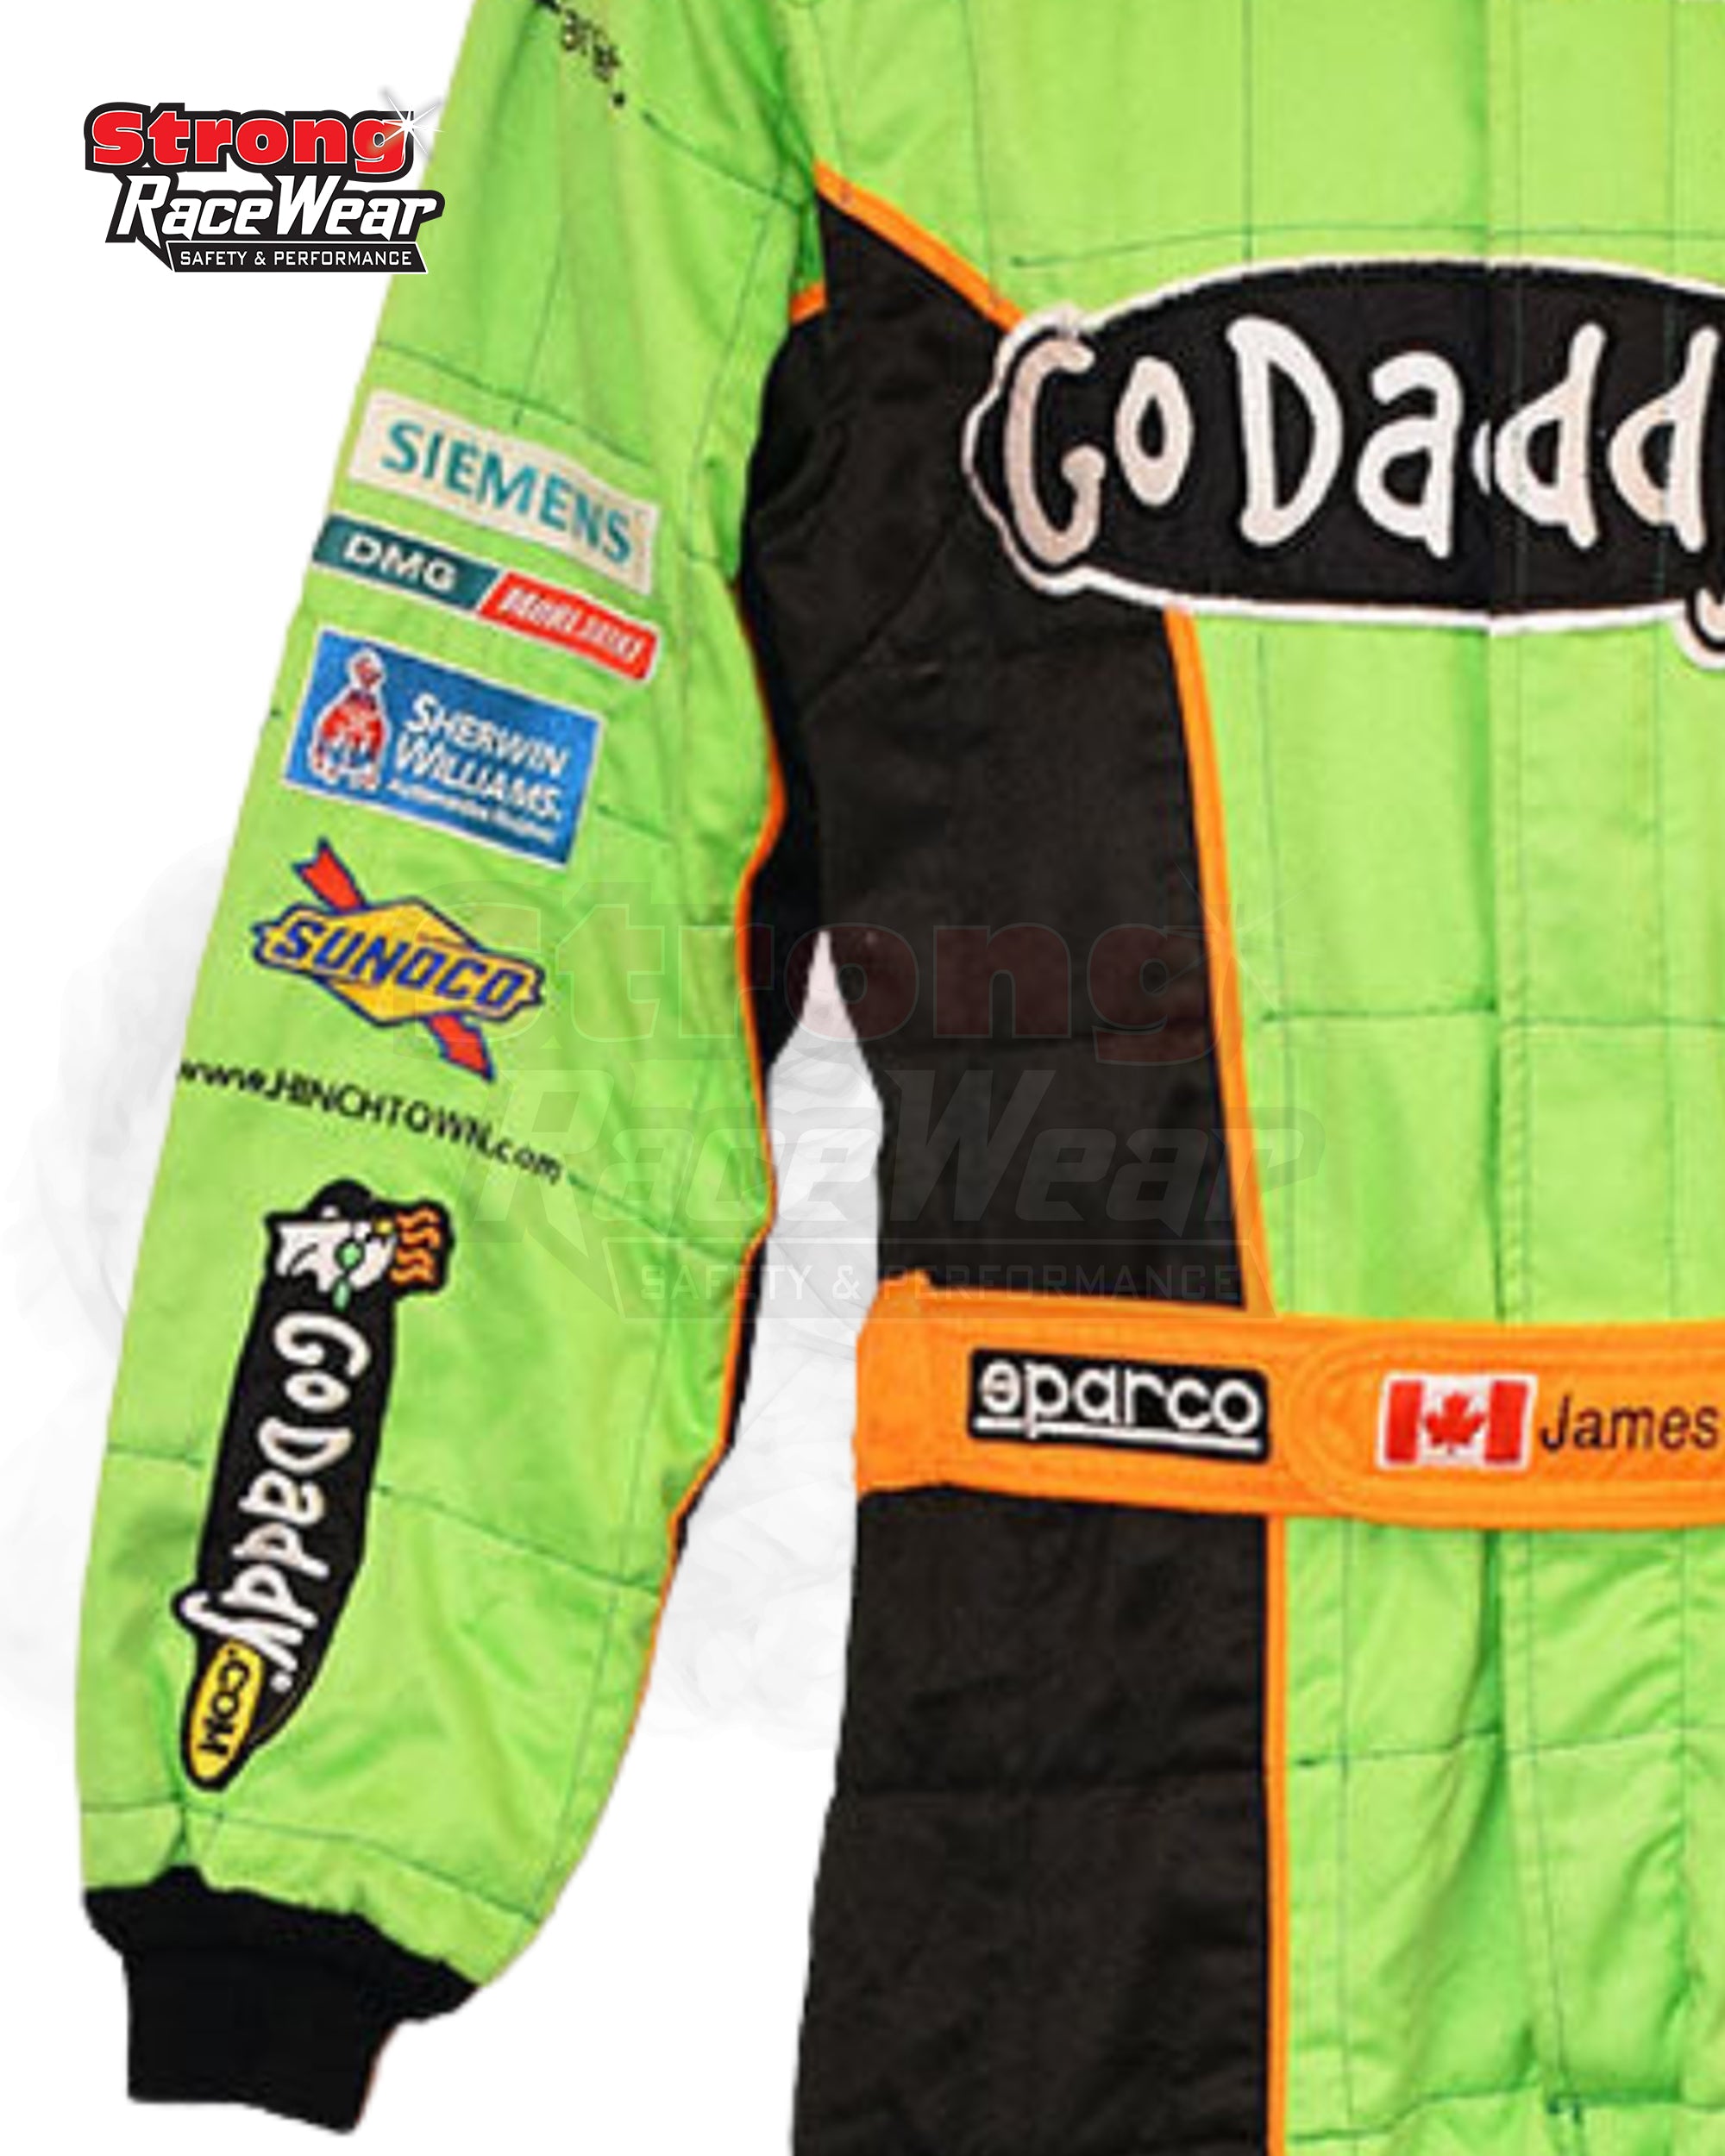 2012 James Hinchcliffe Autosport Indycar Worn Racing Suit